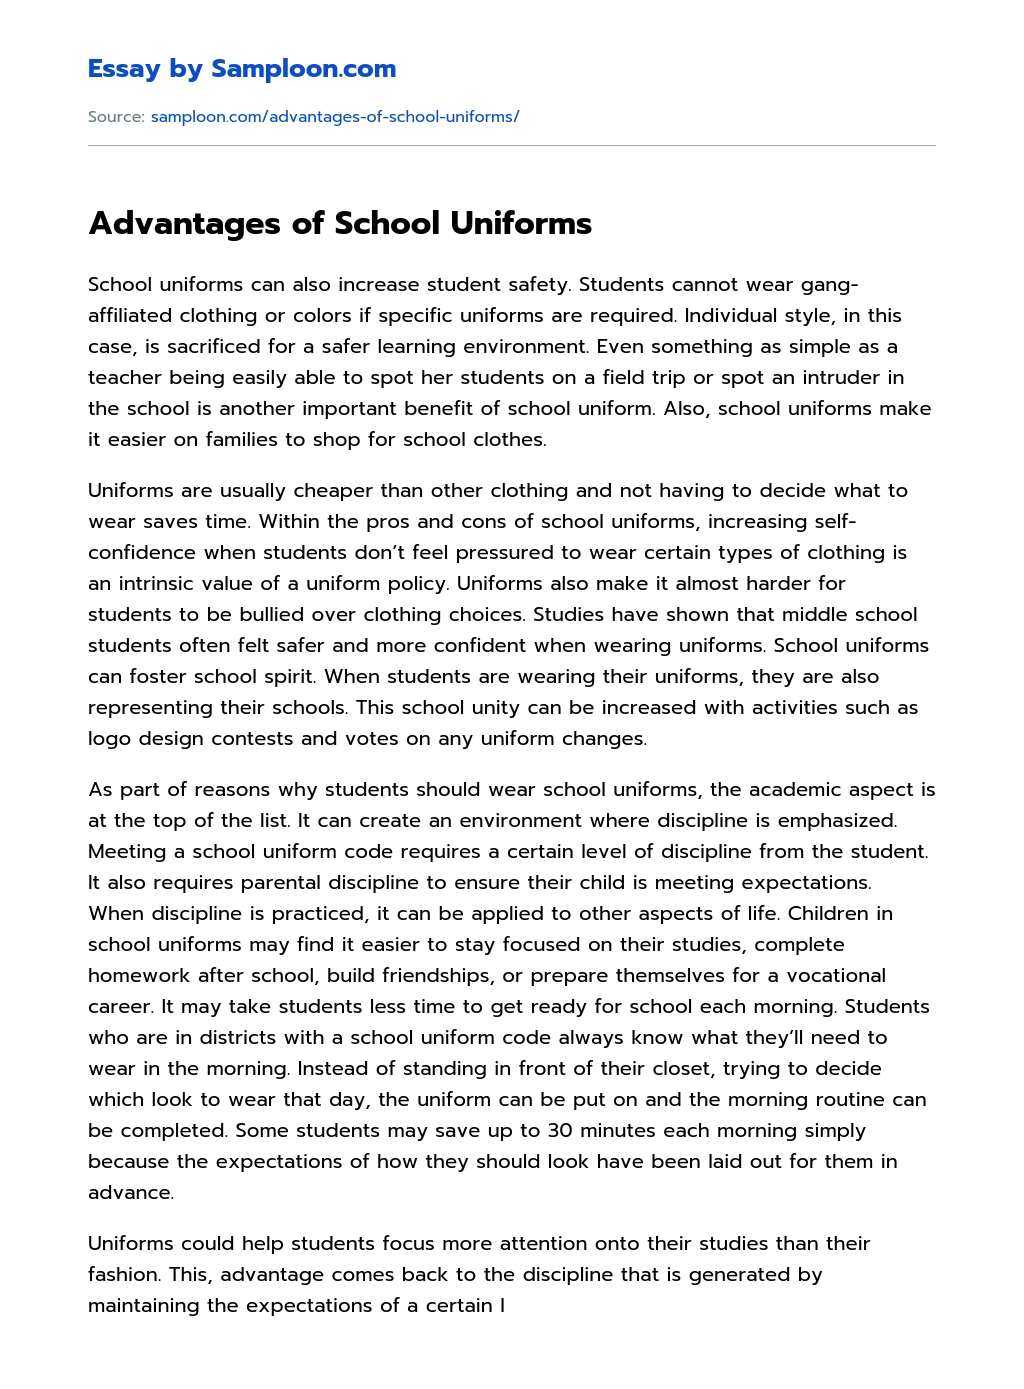 Advantages of School Uniforms essay